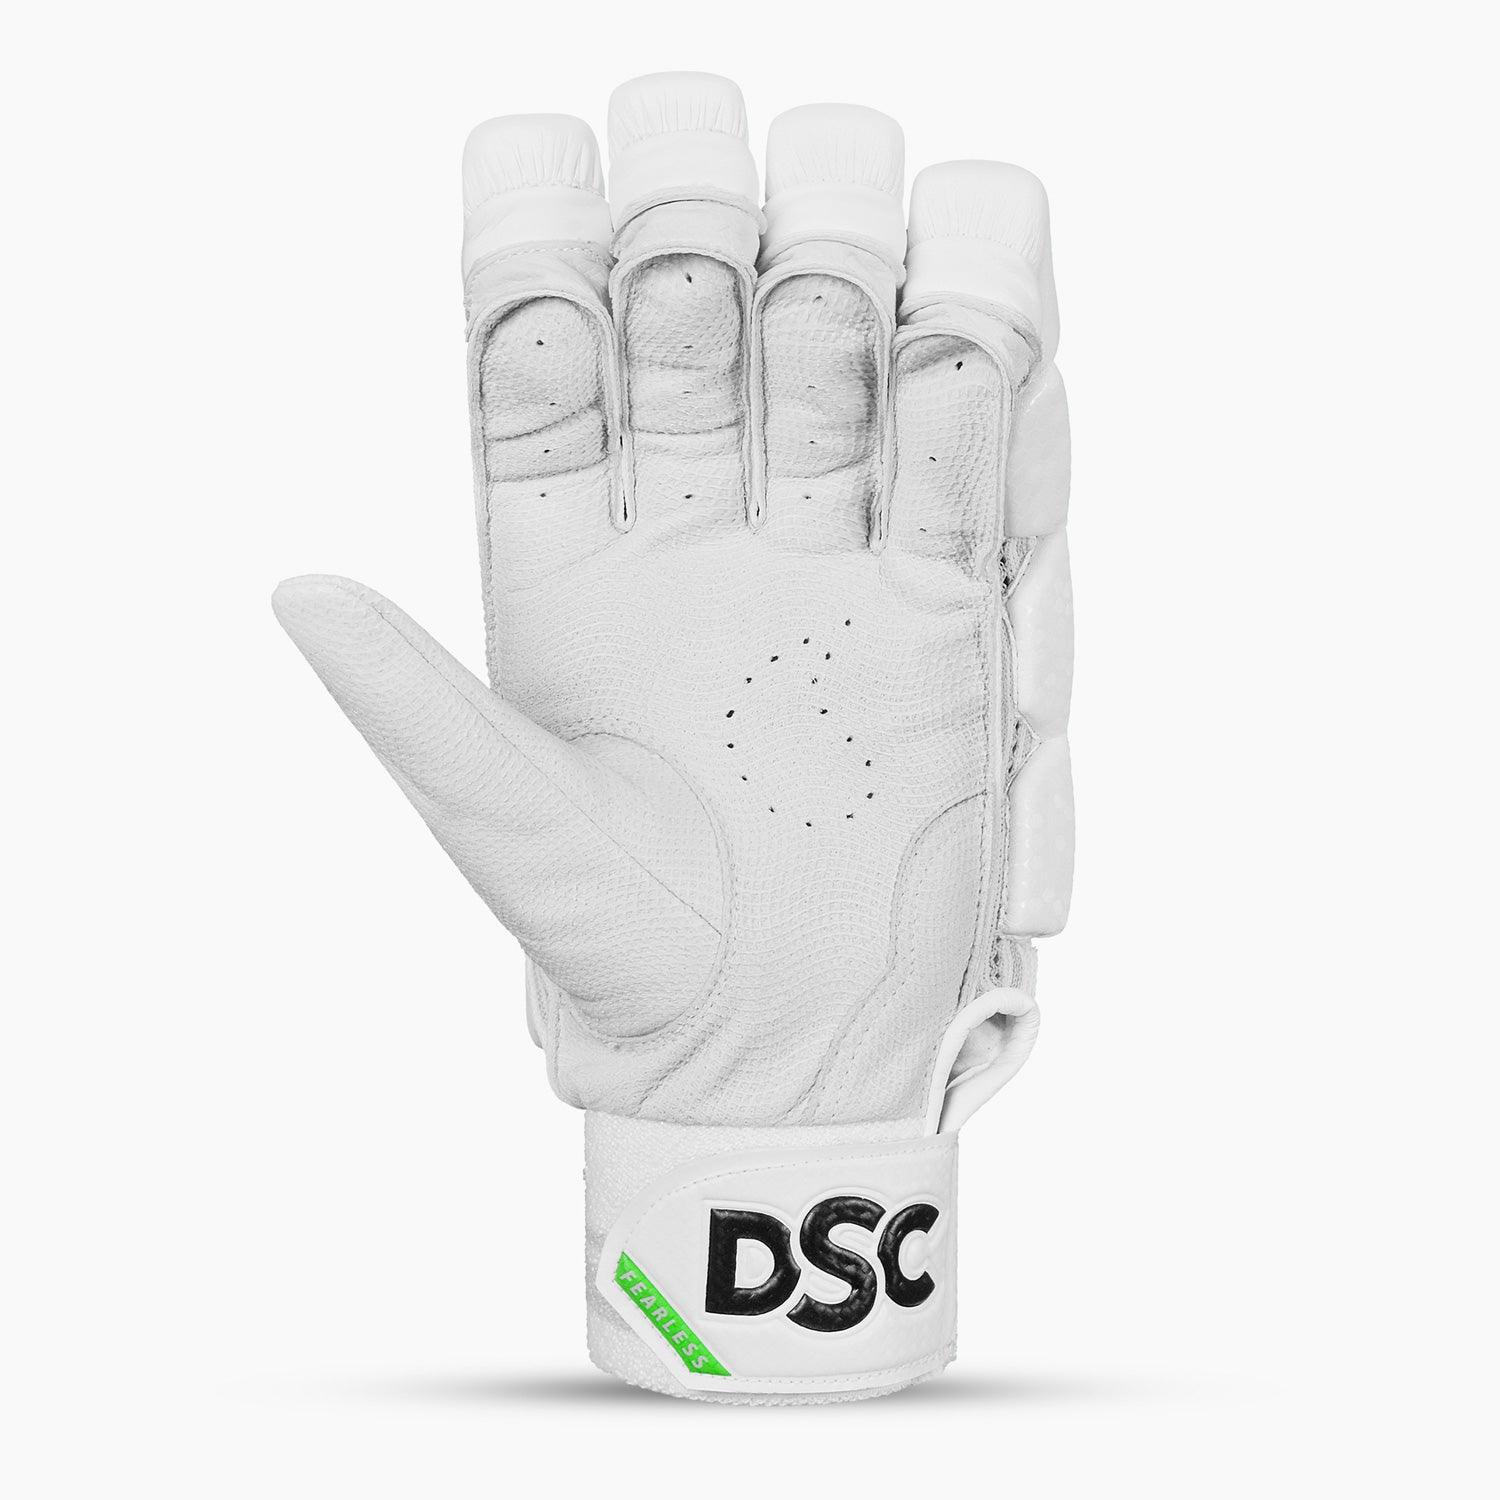 DSC Spliit Players Cricket Batting Gloves - ADULT - AT Sports